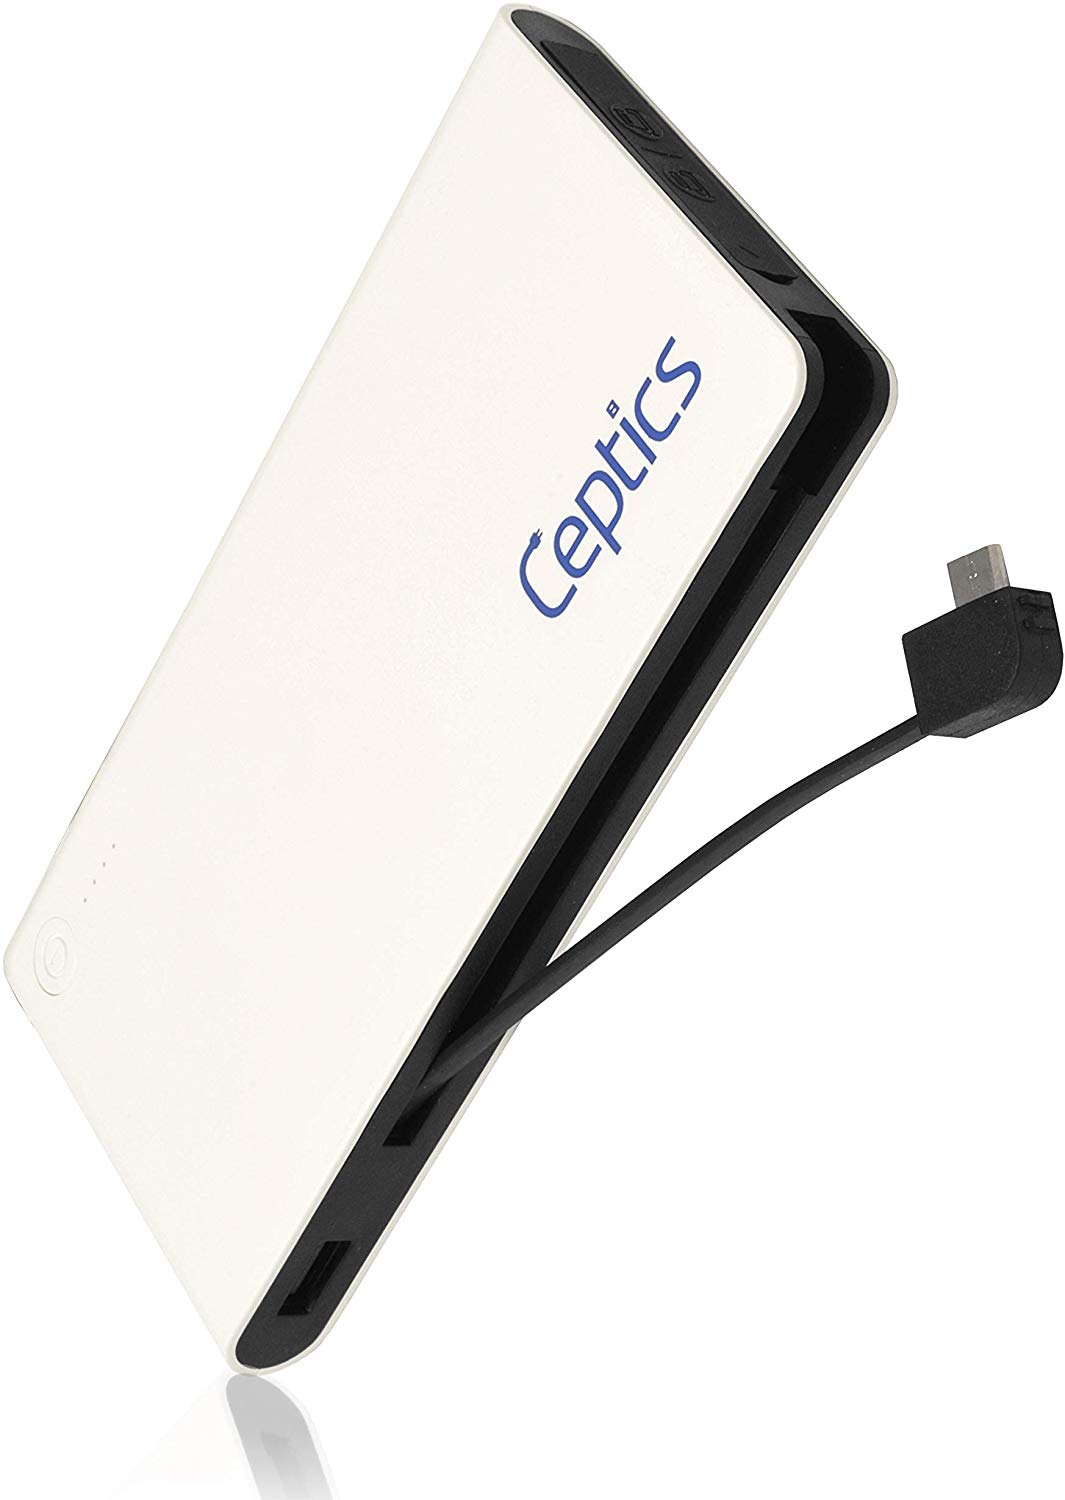 Portable Power Bank USB Battery Charger - 10,000 mAH - Dual USB output –  Ceptics